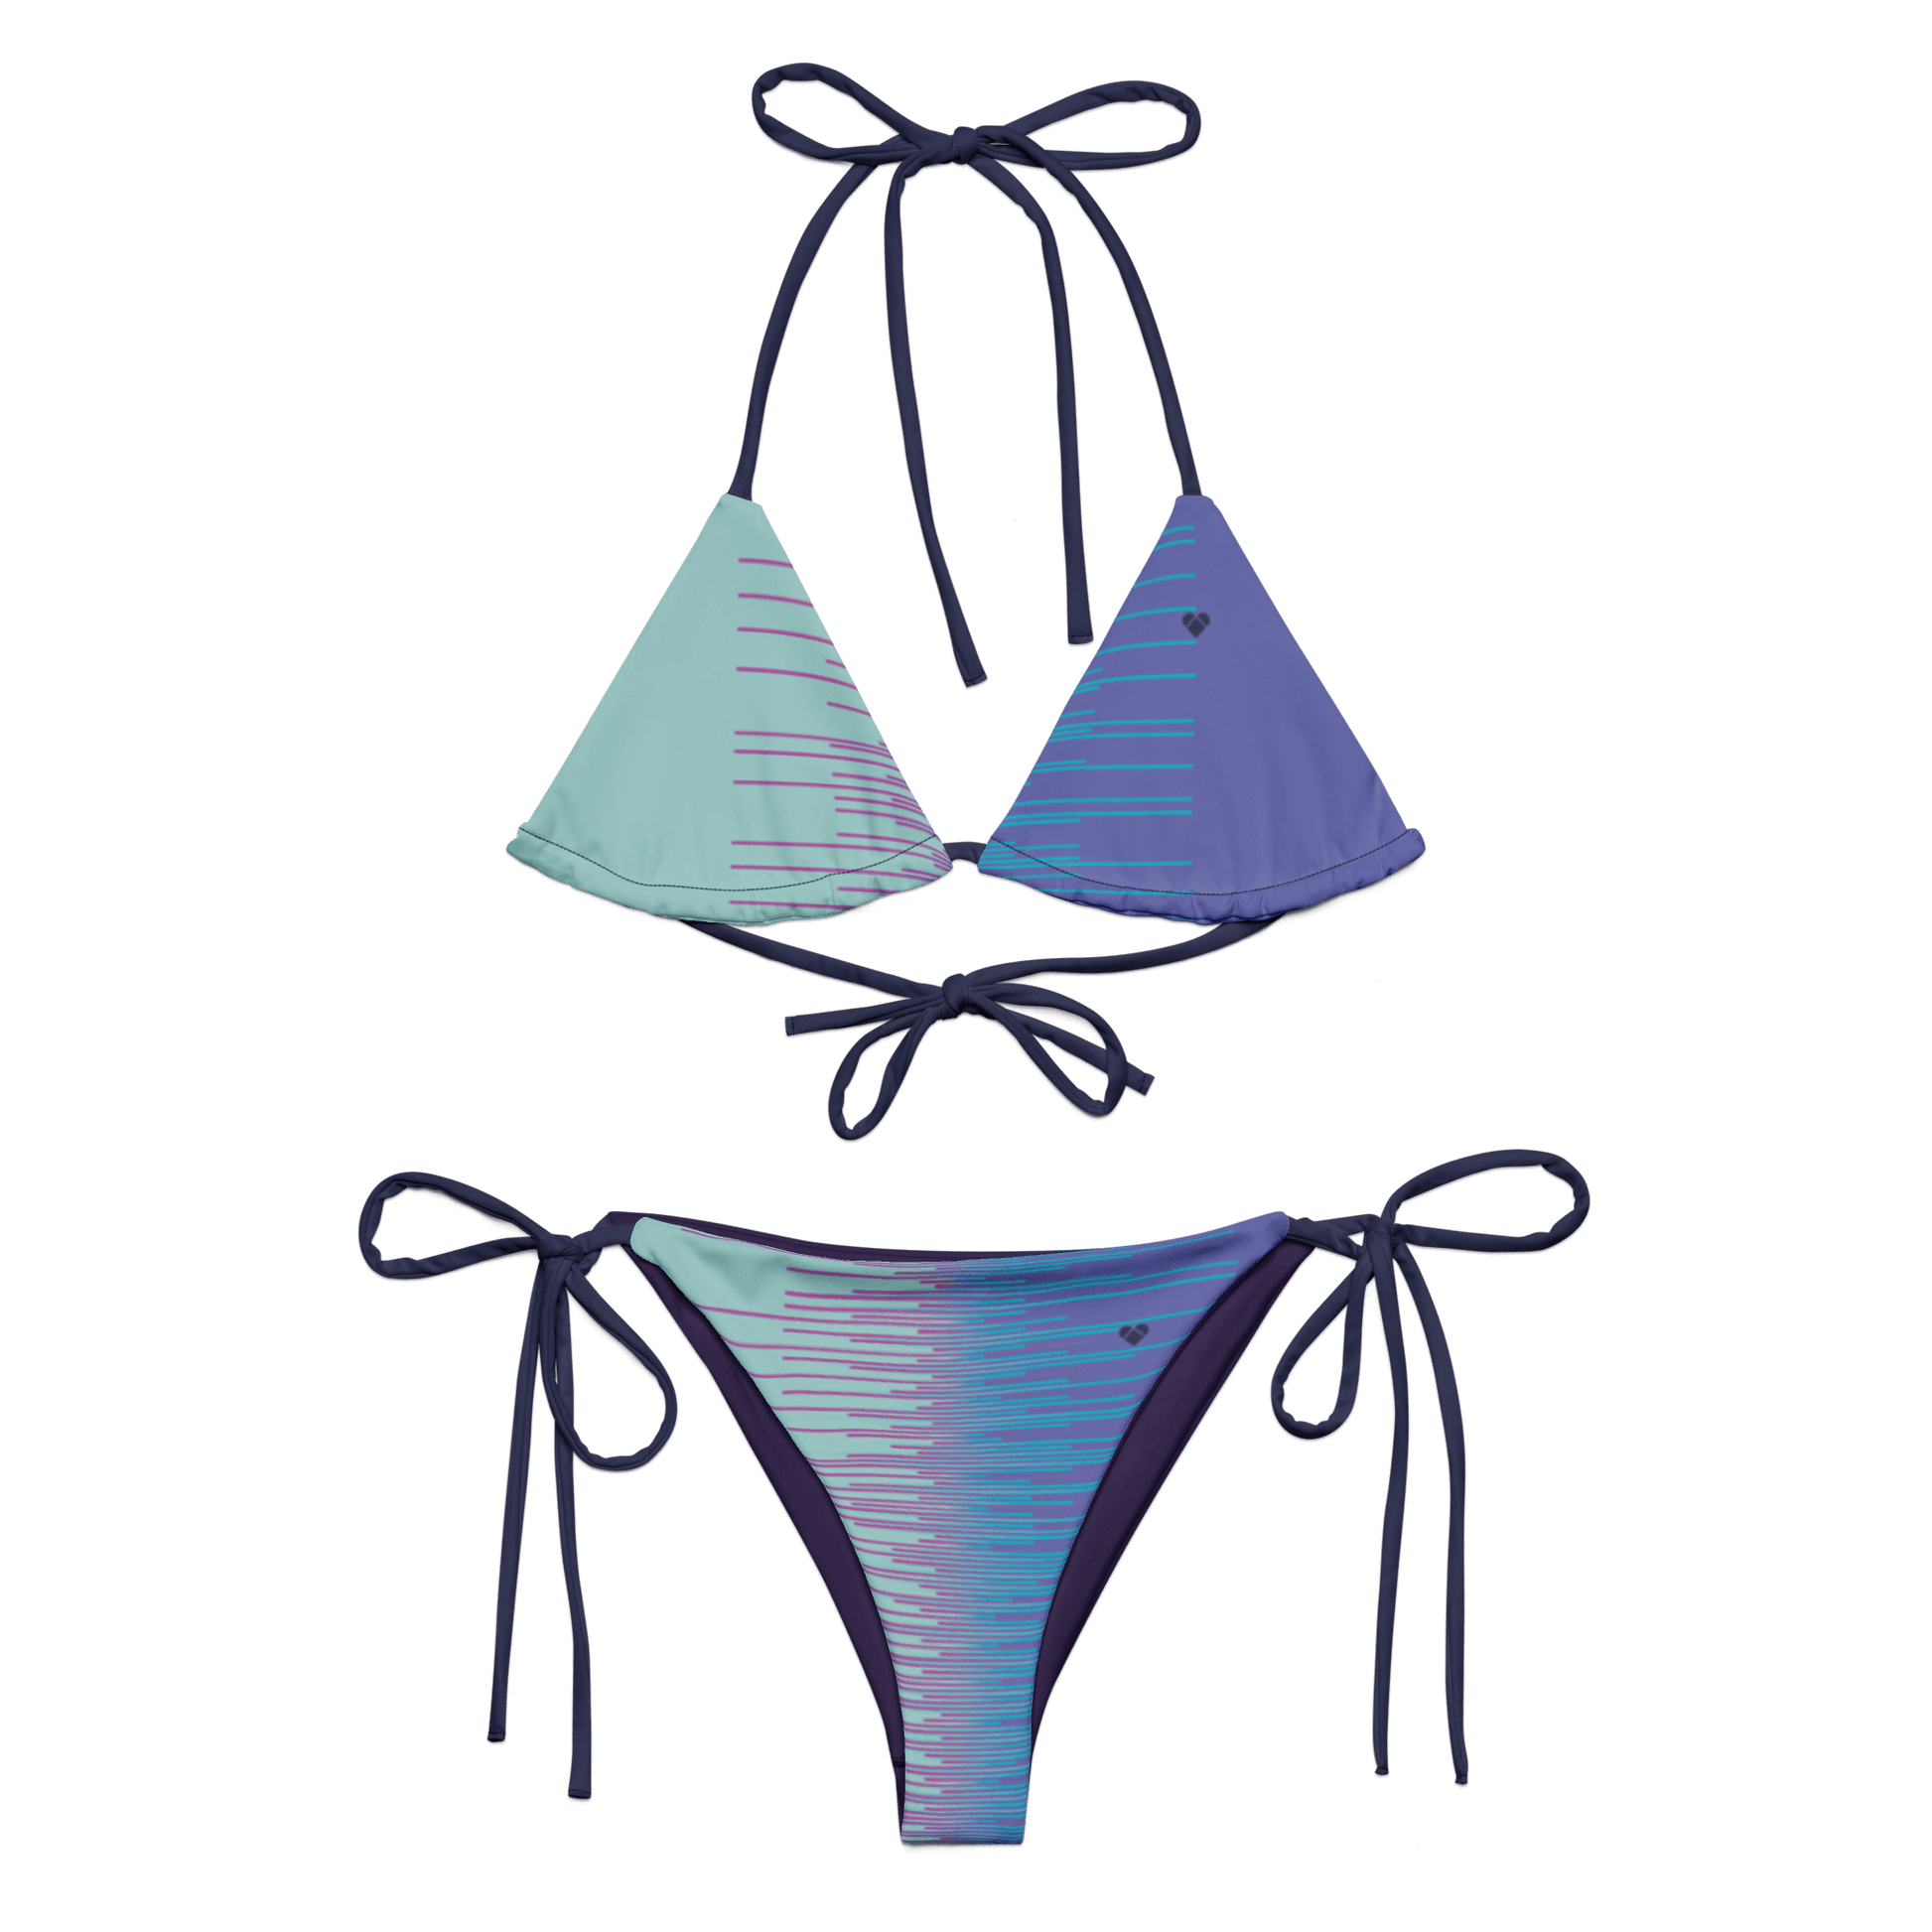 Mint & Periwinkle Dual String Bikini for Women